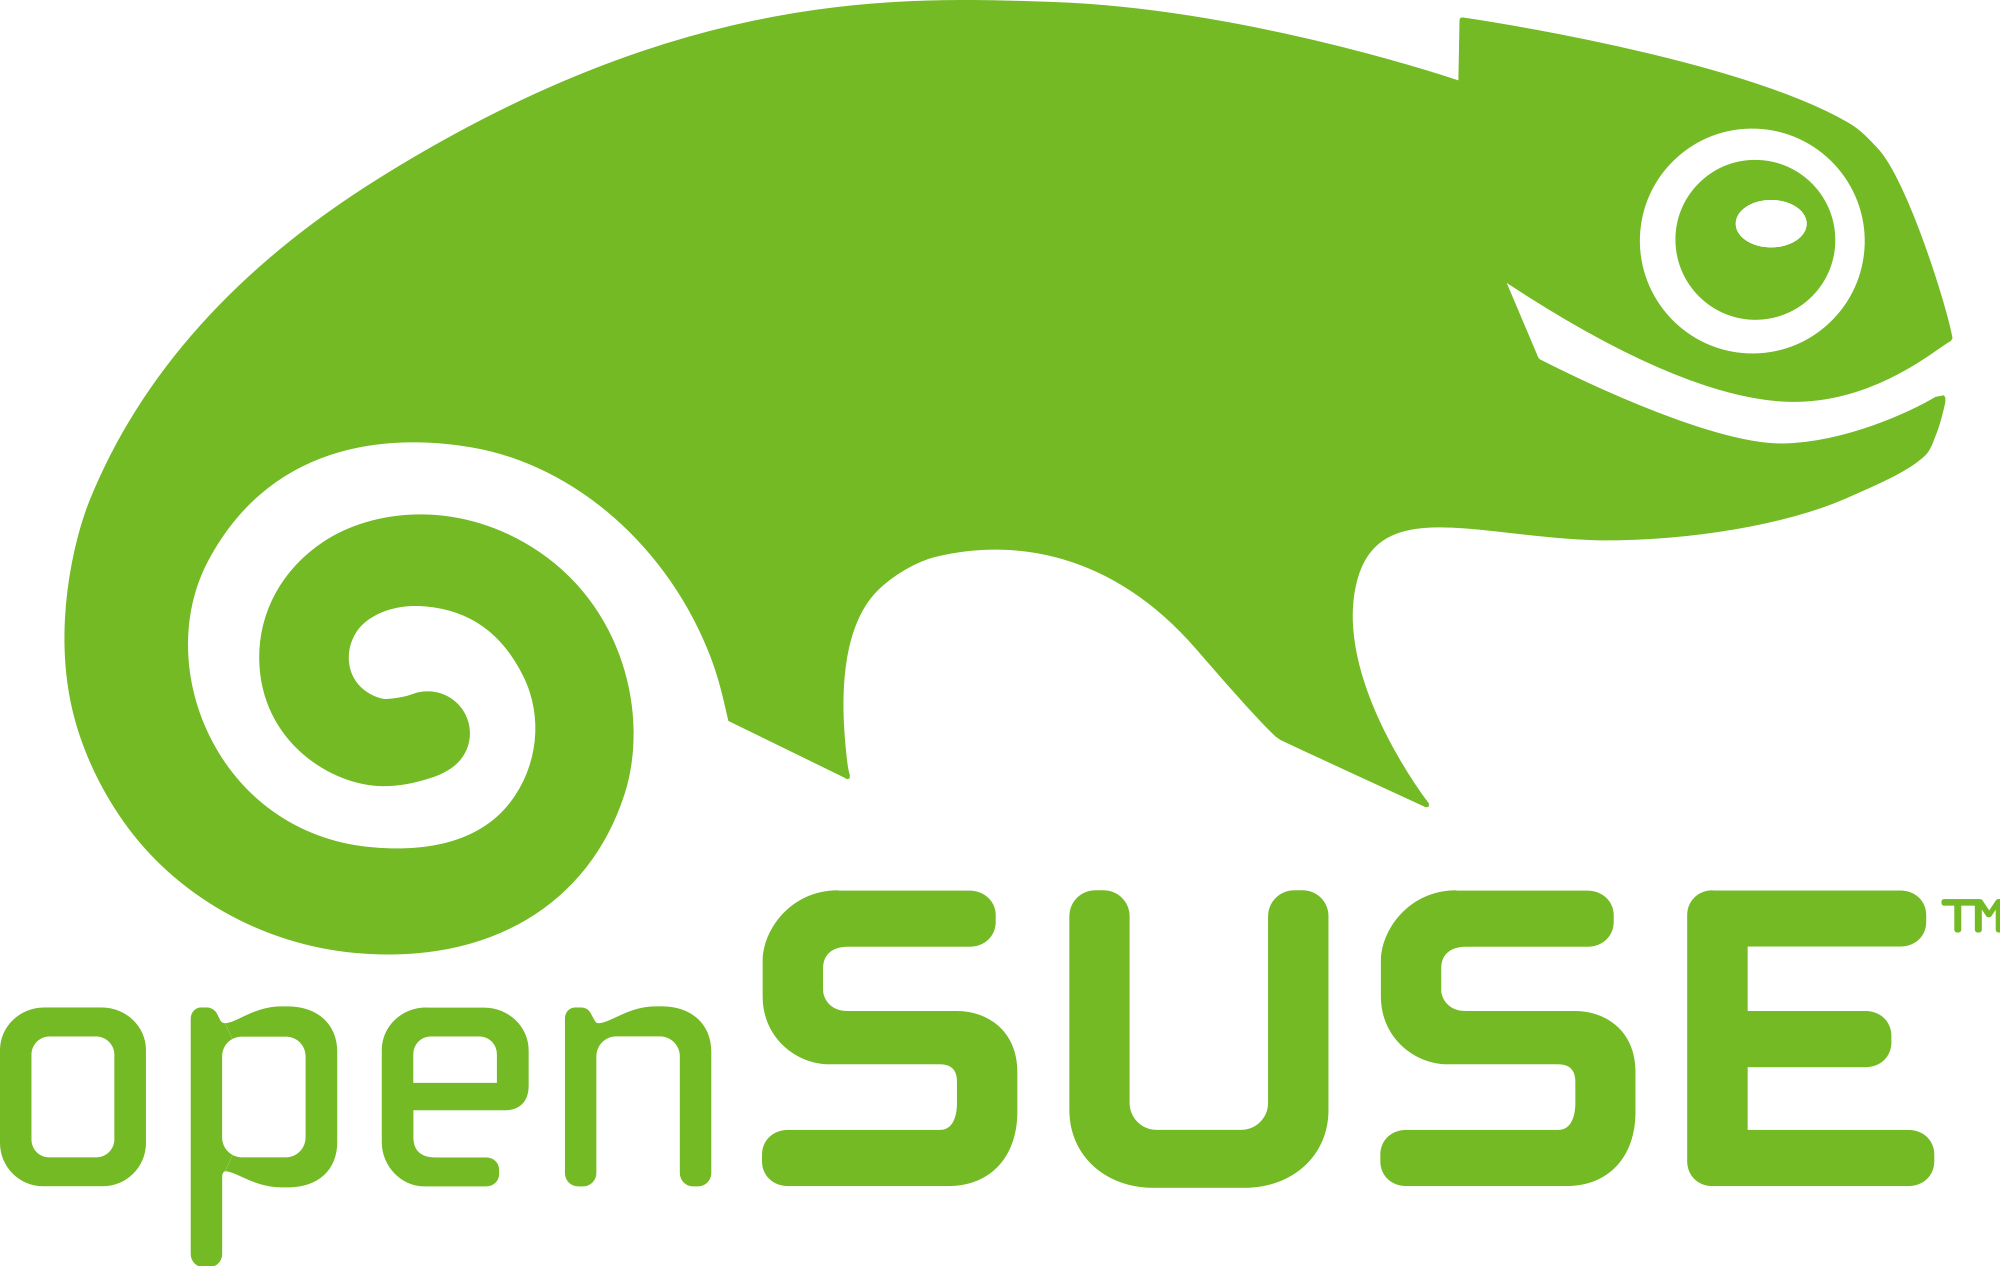 Open suse Linux logo, logotype